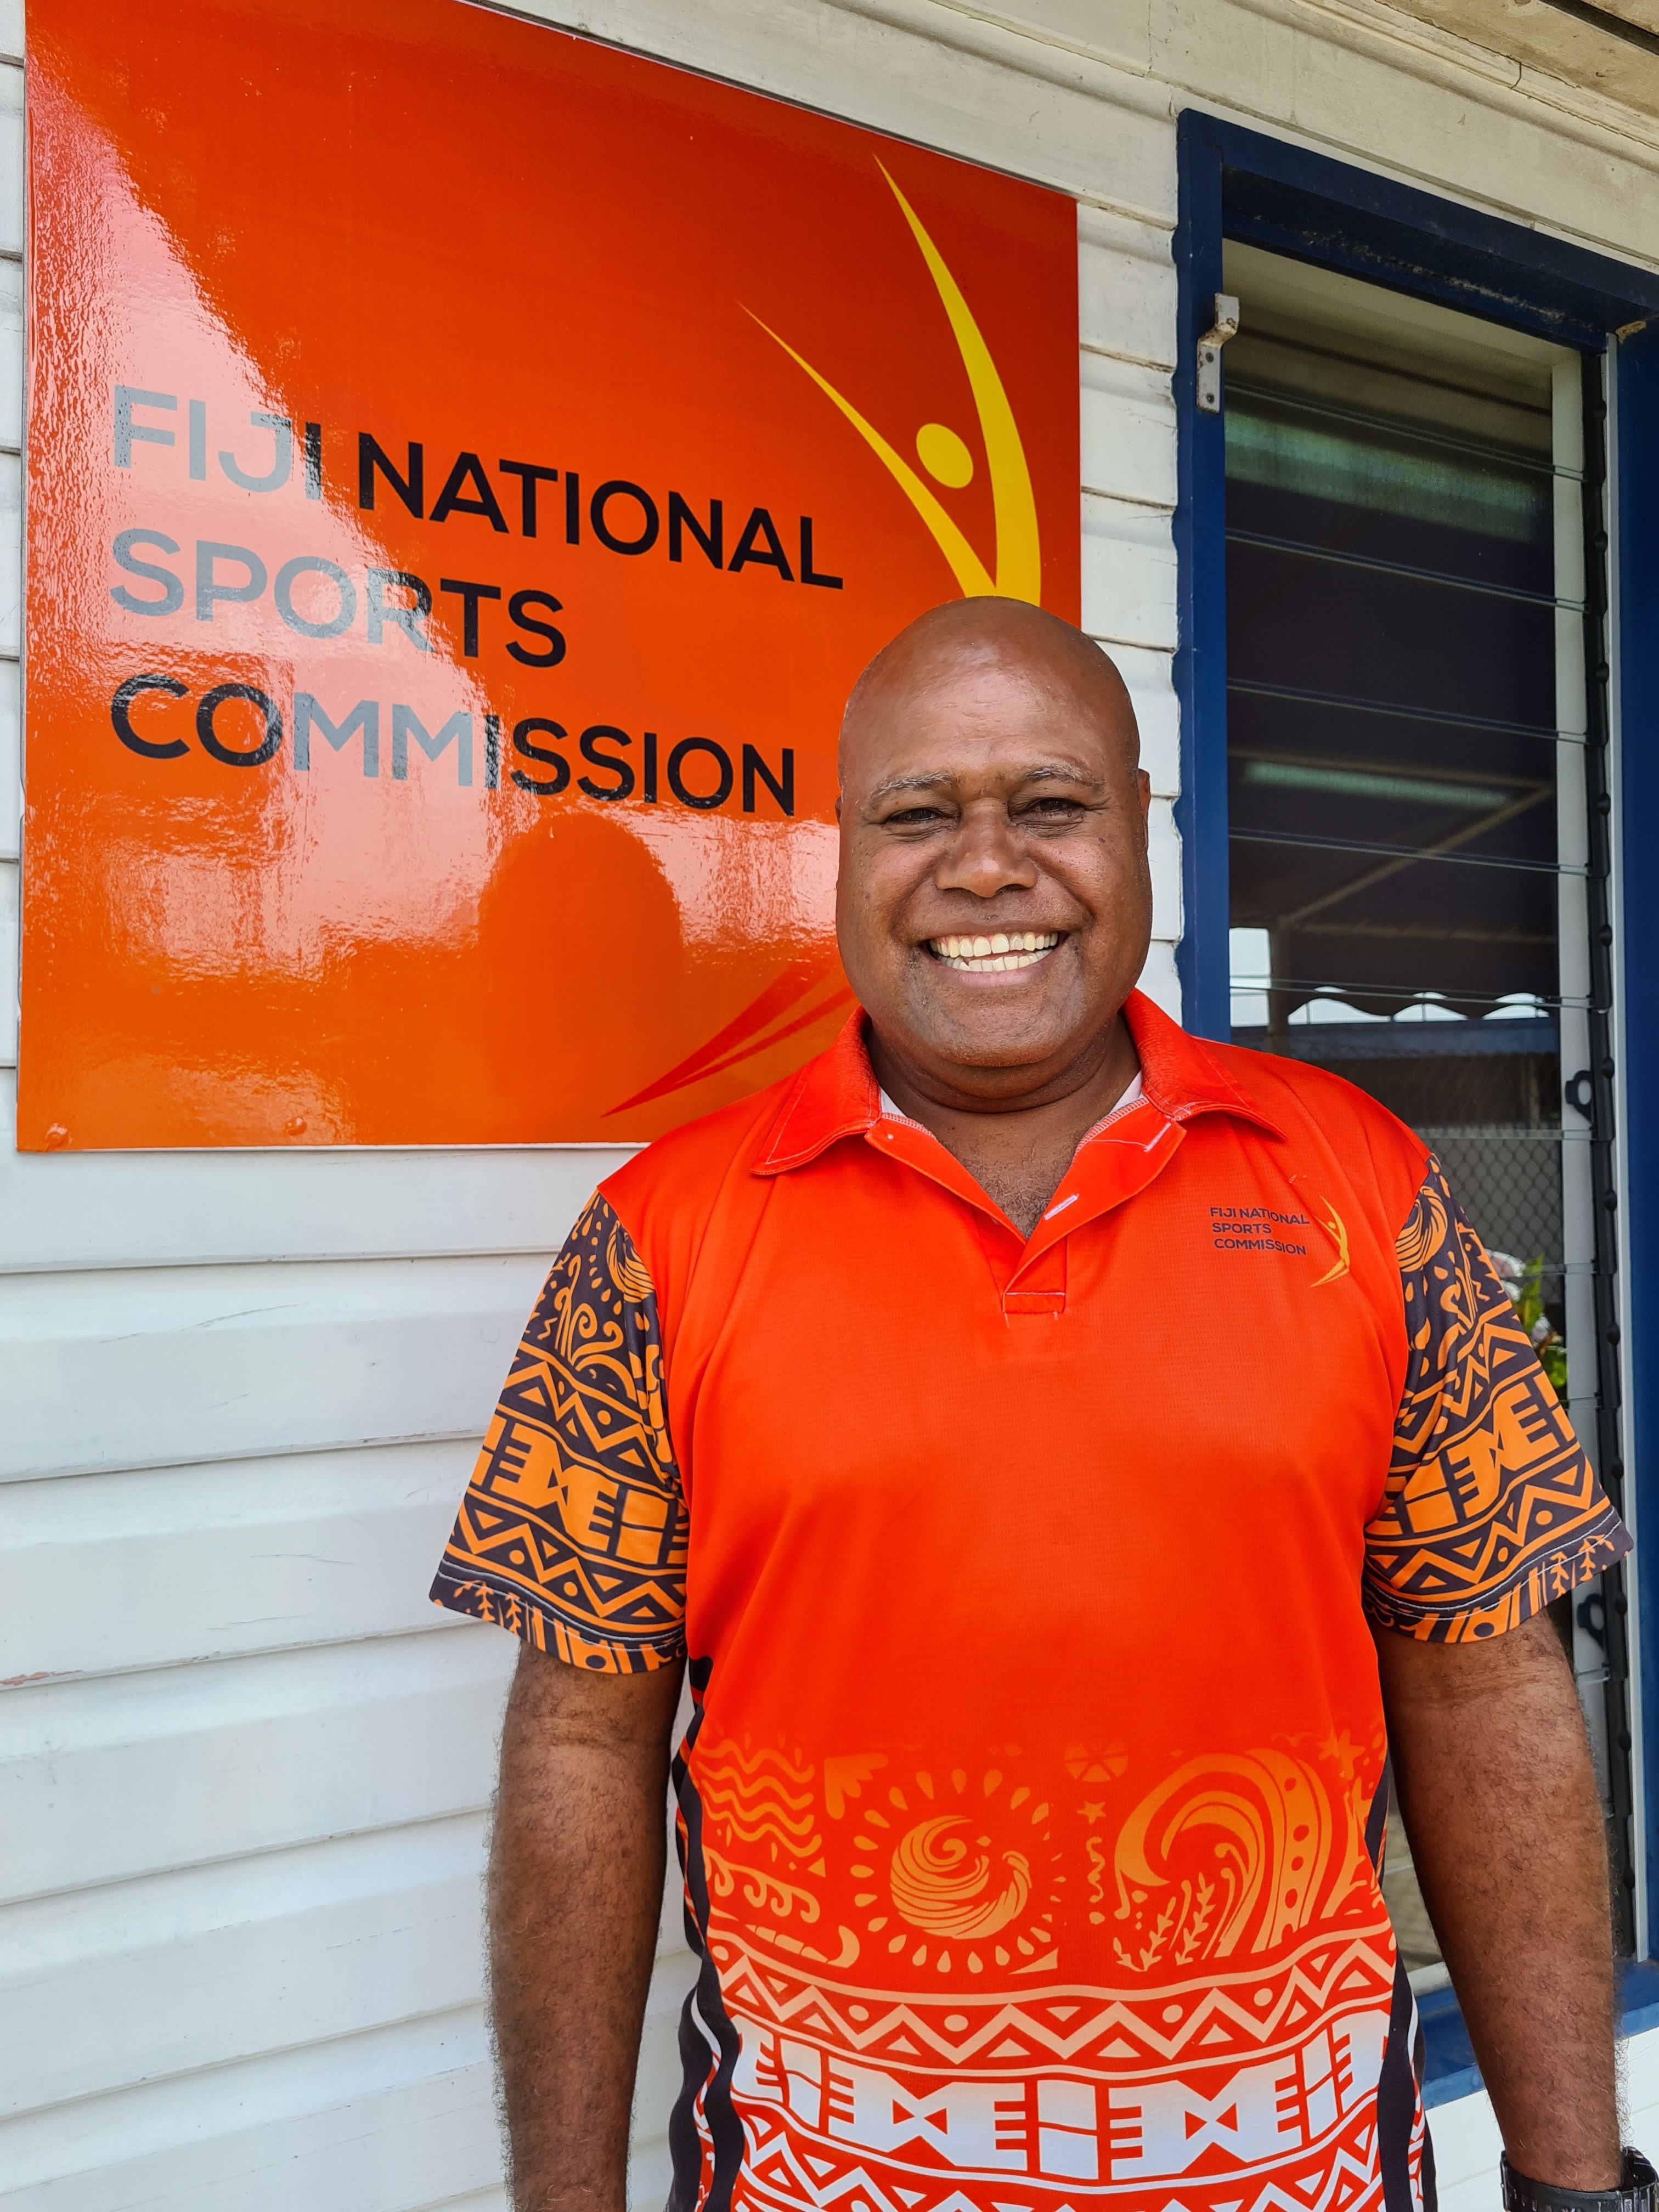 Photo of Mr Joe Tuinamata wearing a bright orange t-shirt with the Fiji National Sports Commission logo